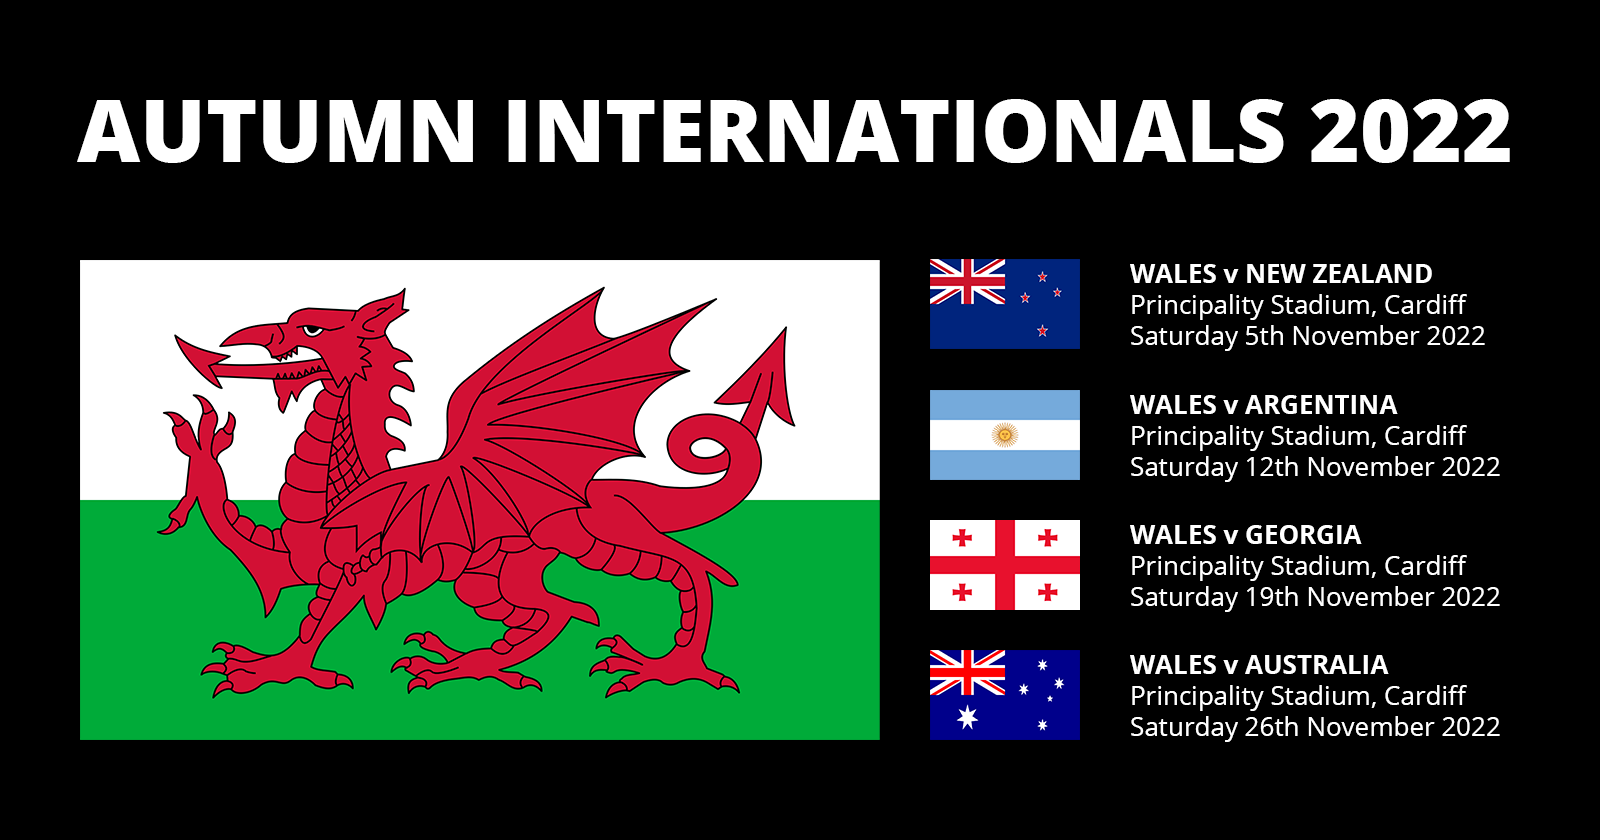 Wales Autumn Internationals 2022 Fixtures List 